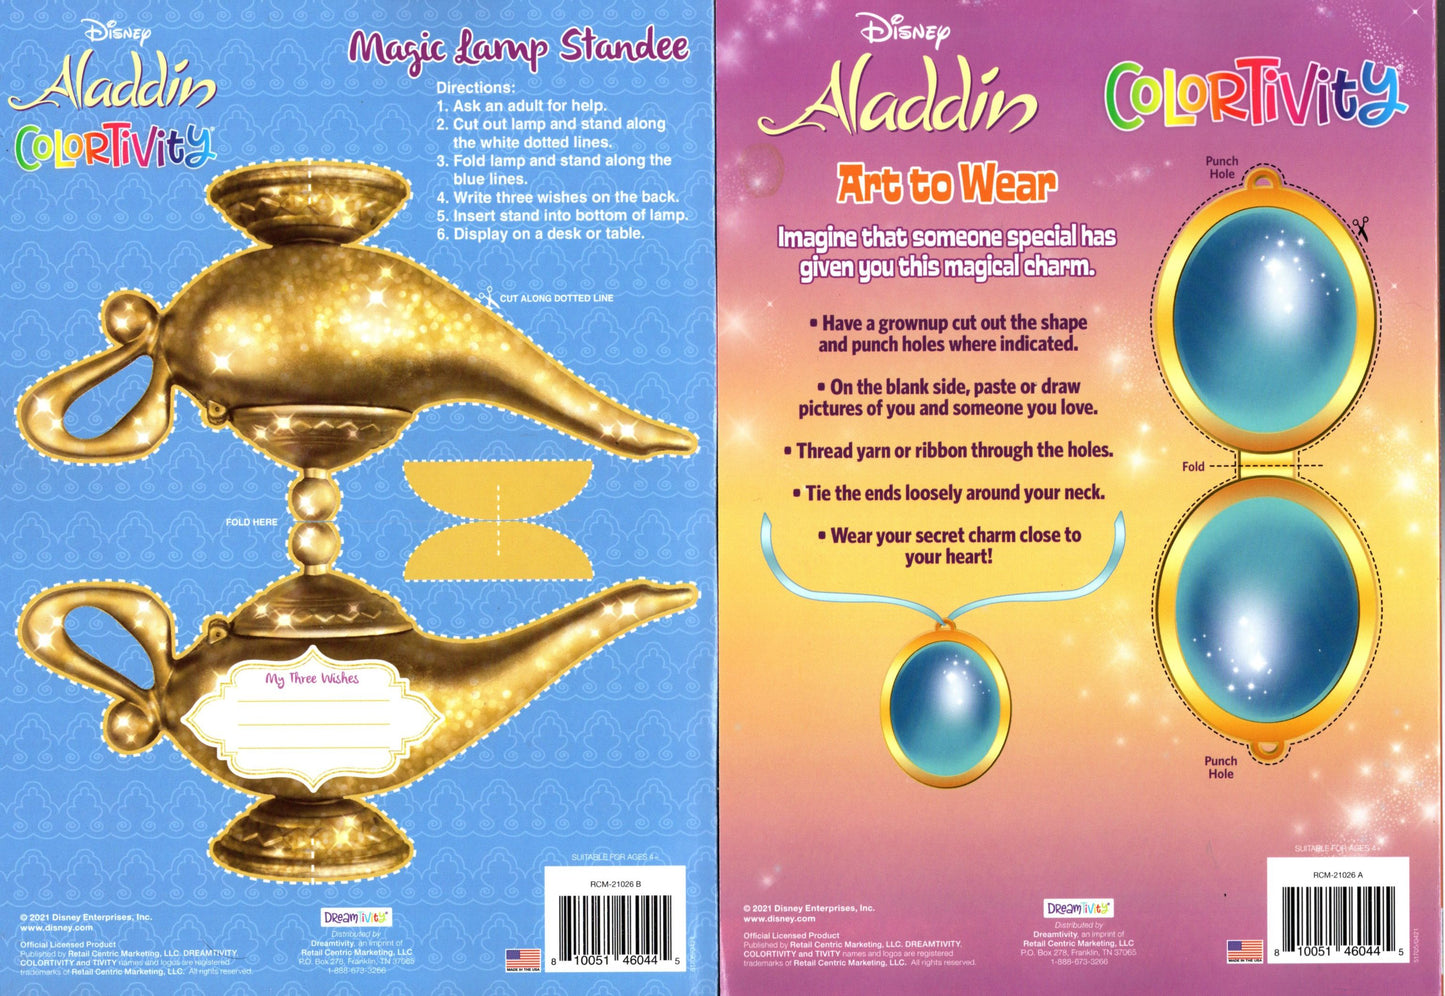 Disney Aladdin - Three Wishes & True Magic - Coloring & Activity Book (Set of 2 Books)